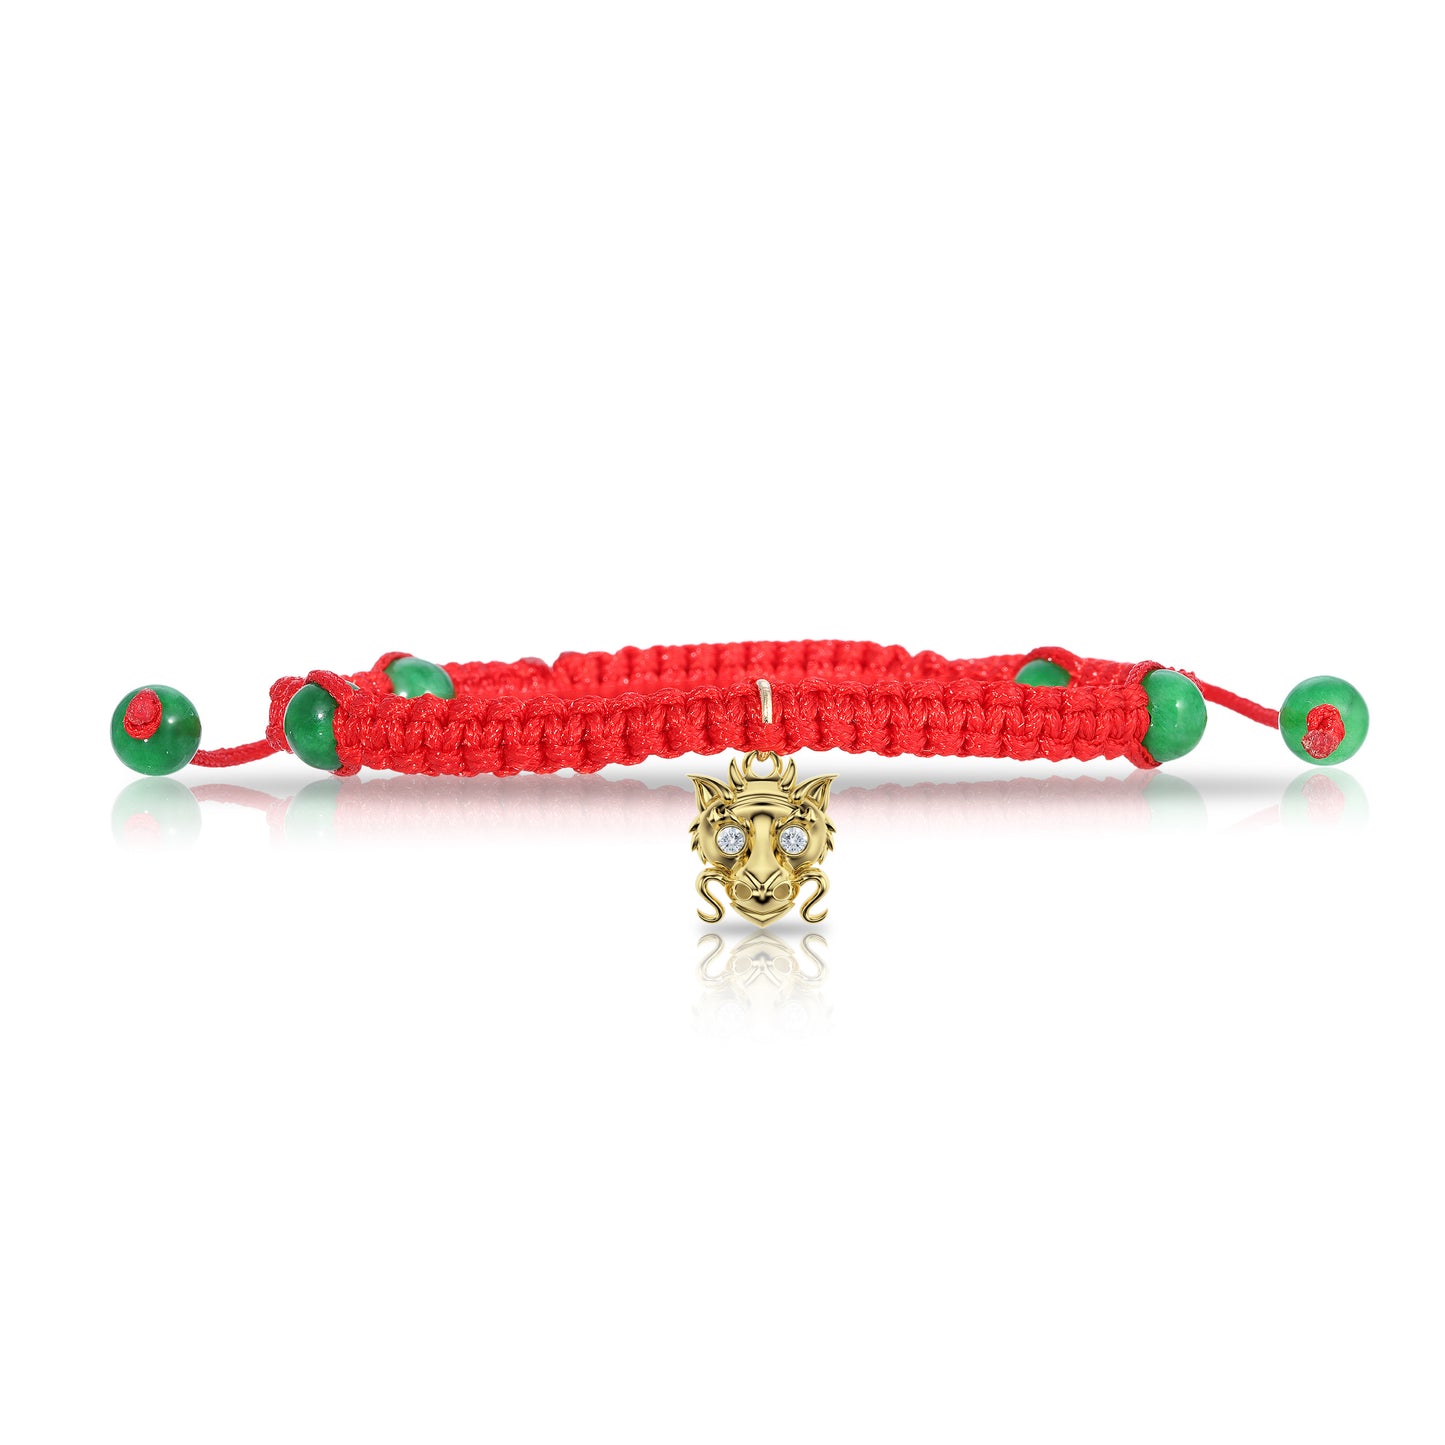 Bracelet with Dragon Charm (Render)